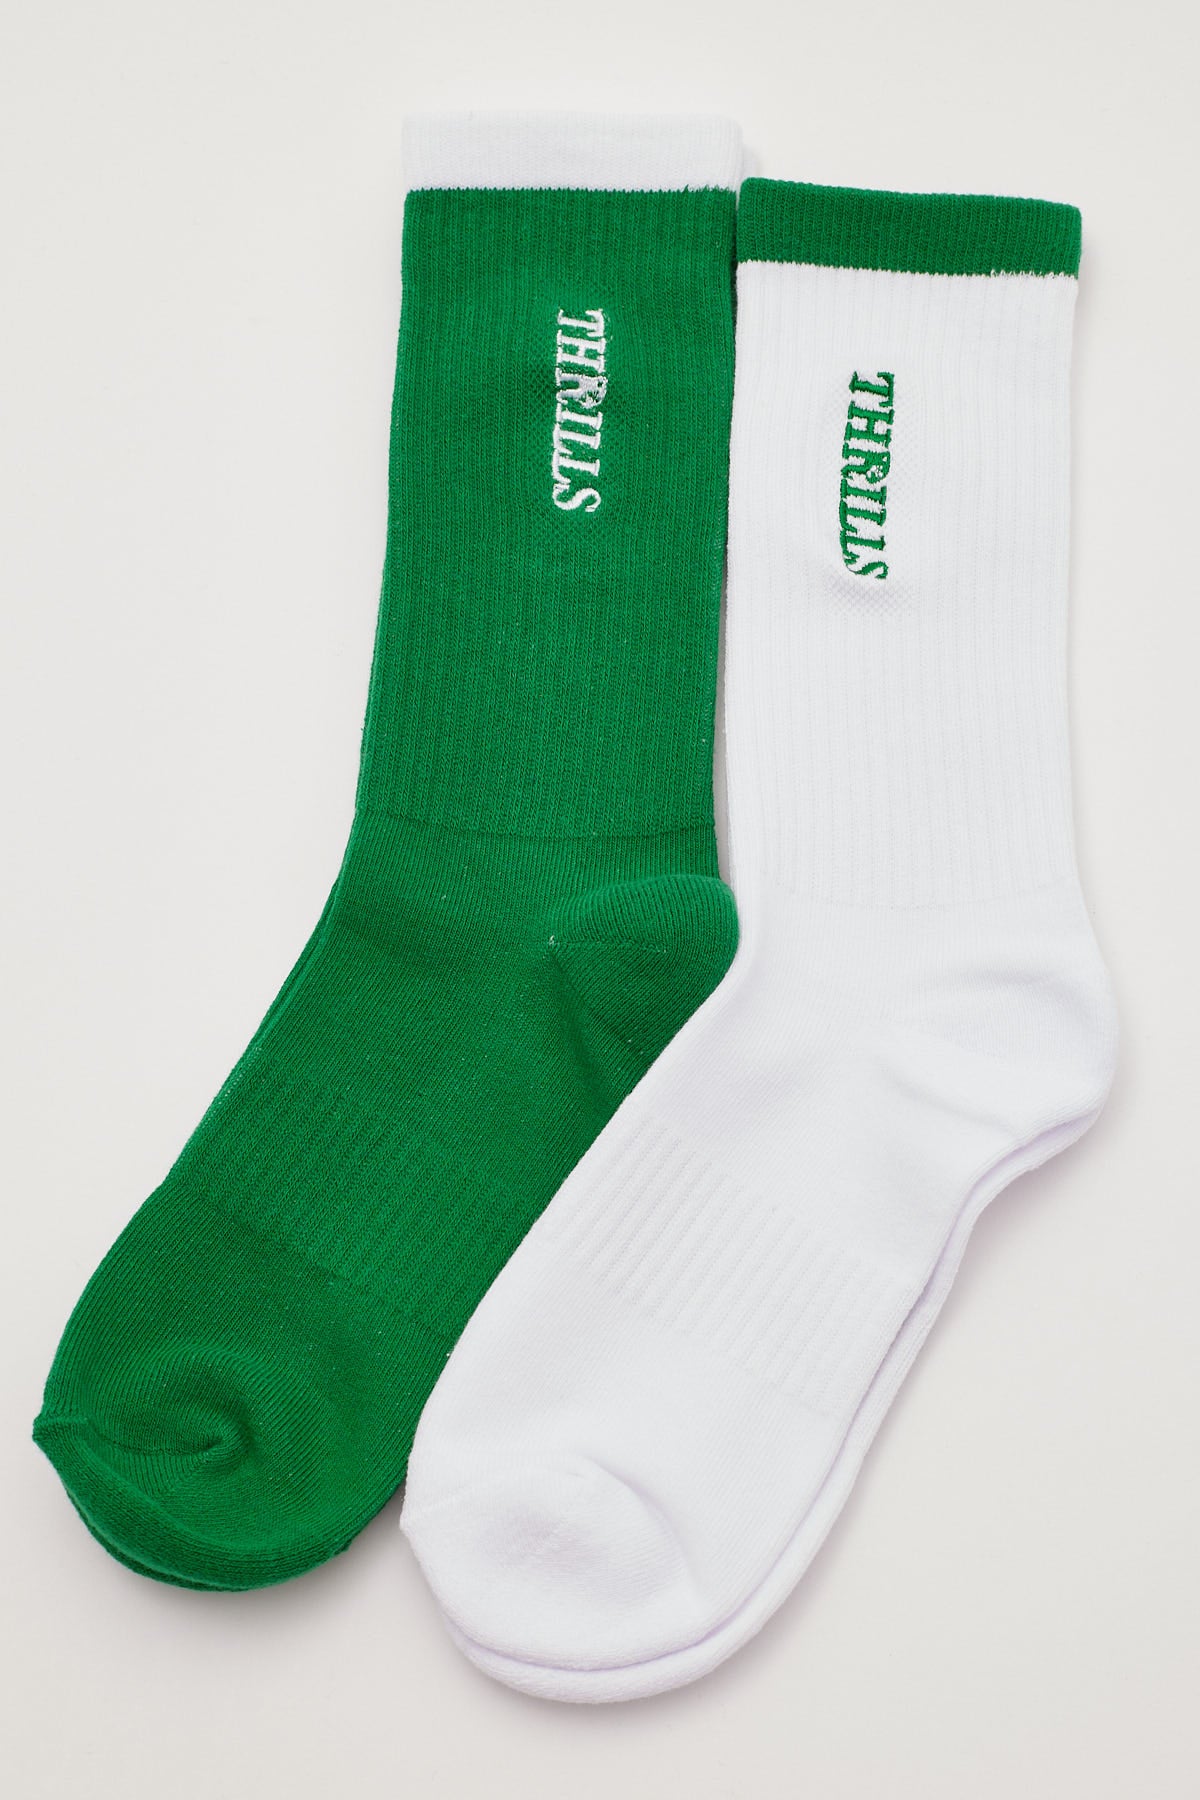 Thrills Lucky Strikes Twice 2Pk Socks White/Green